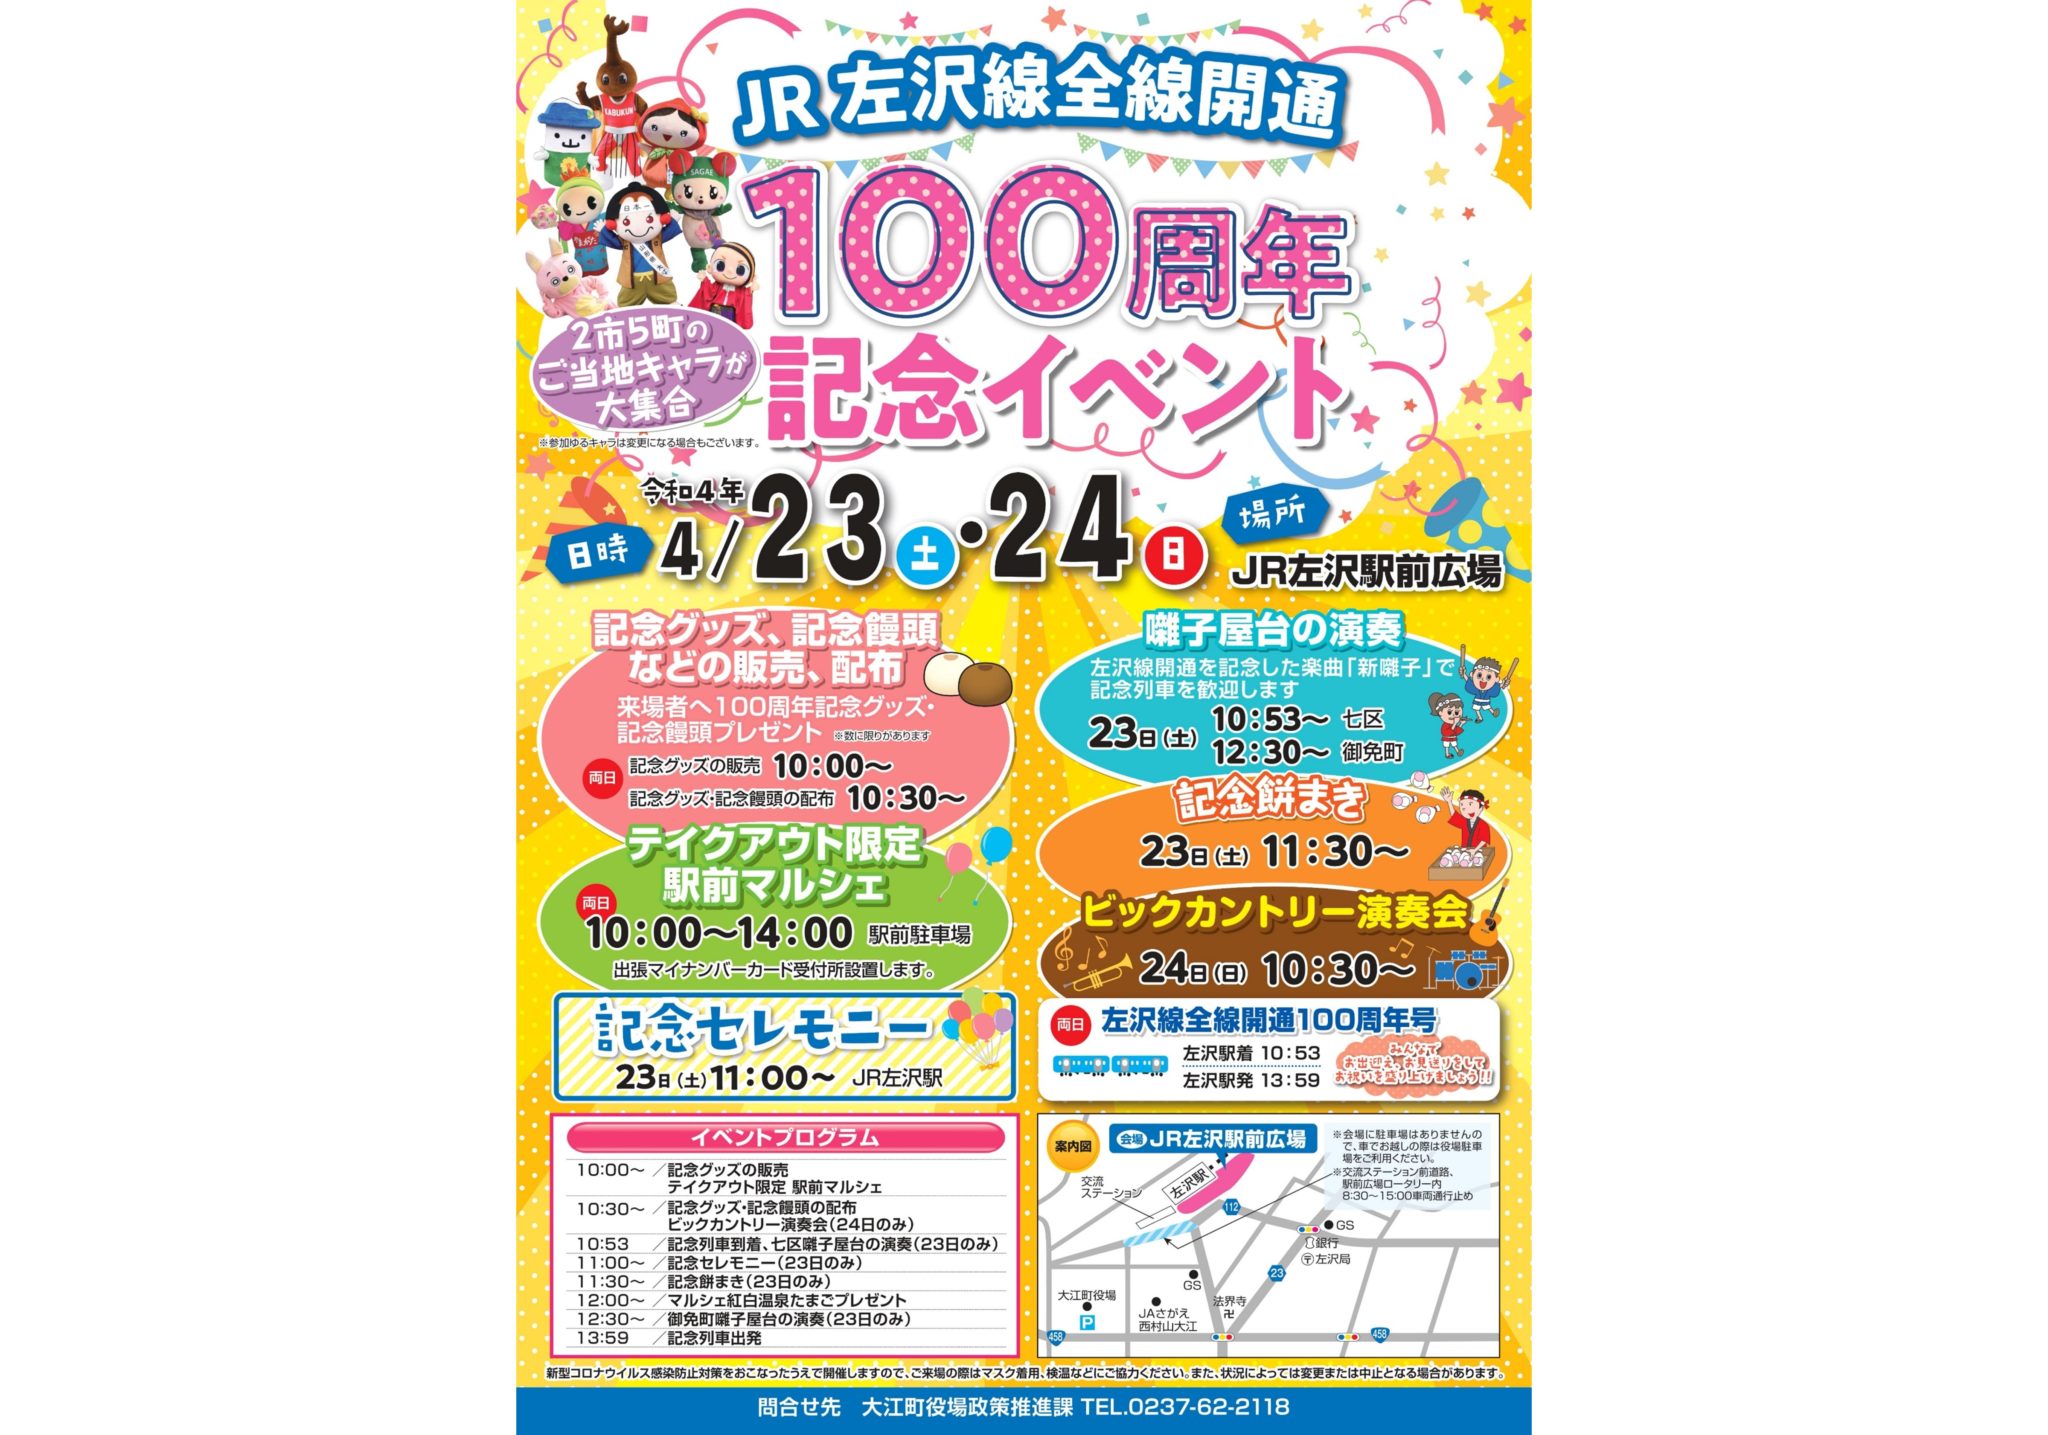 JR左沢(あてらざわ)線全線開通 100周年記念イベント